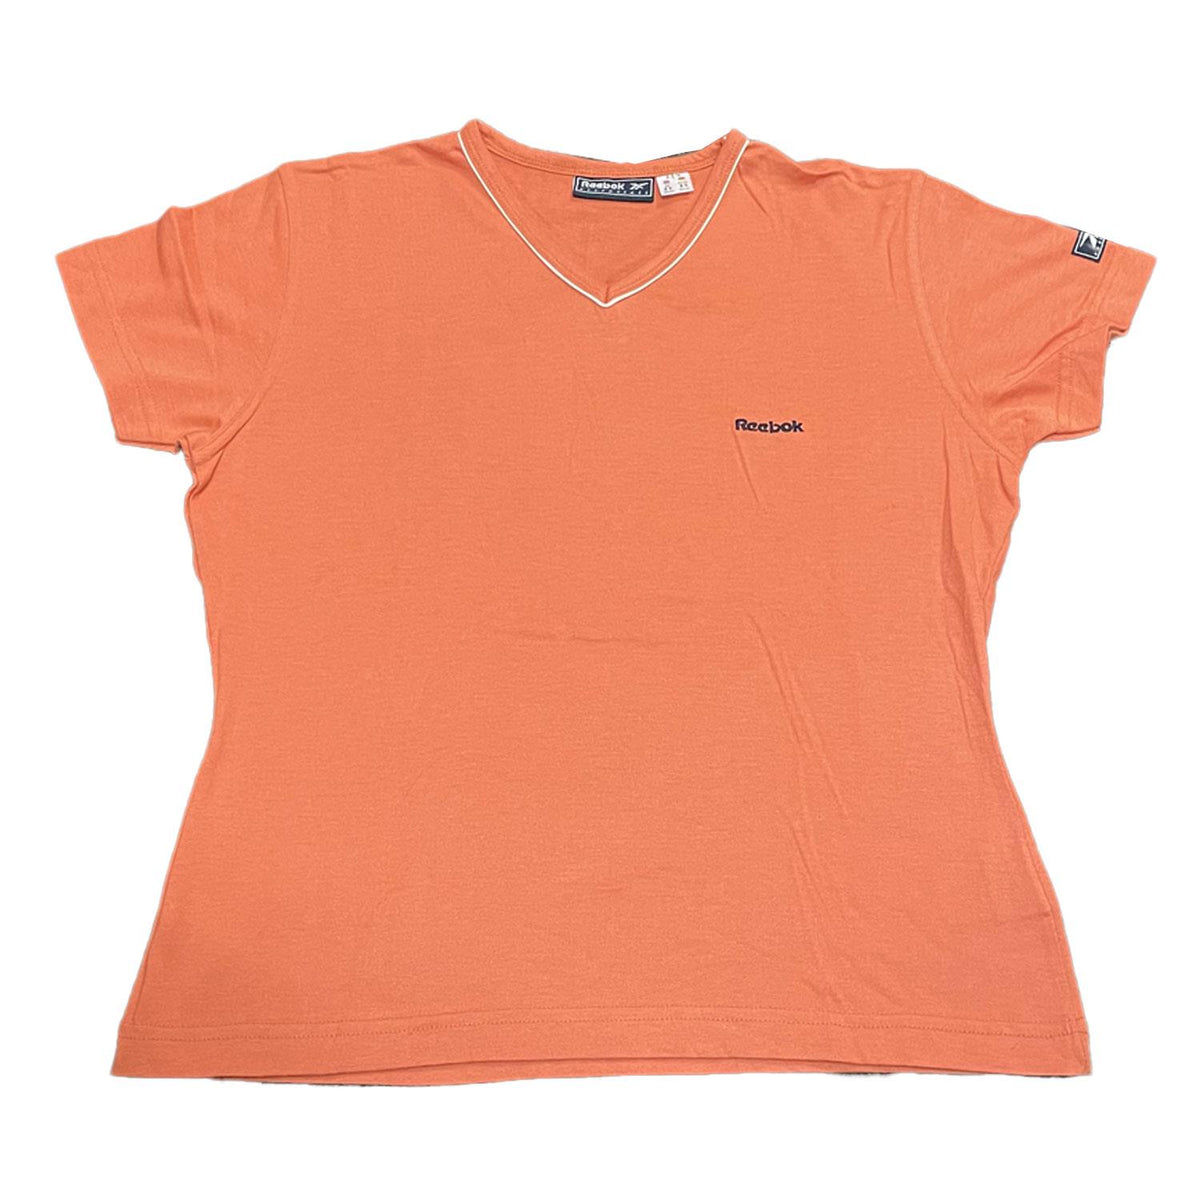 Reebok Womens Athletic Department T-Shirt - Orange - UK Size 12